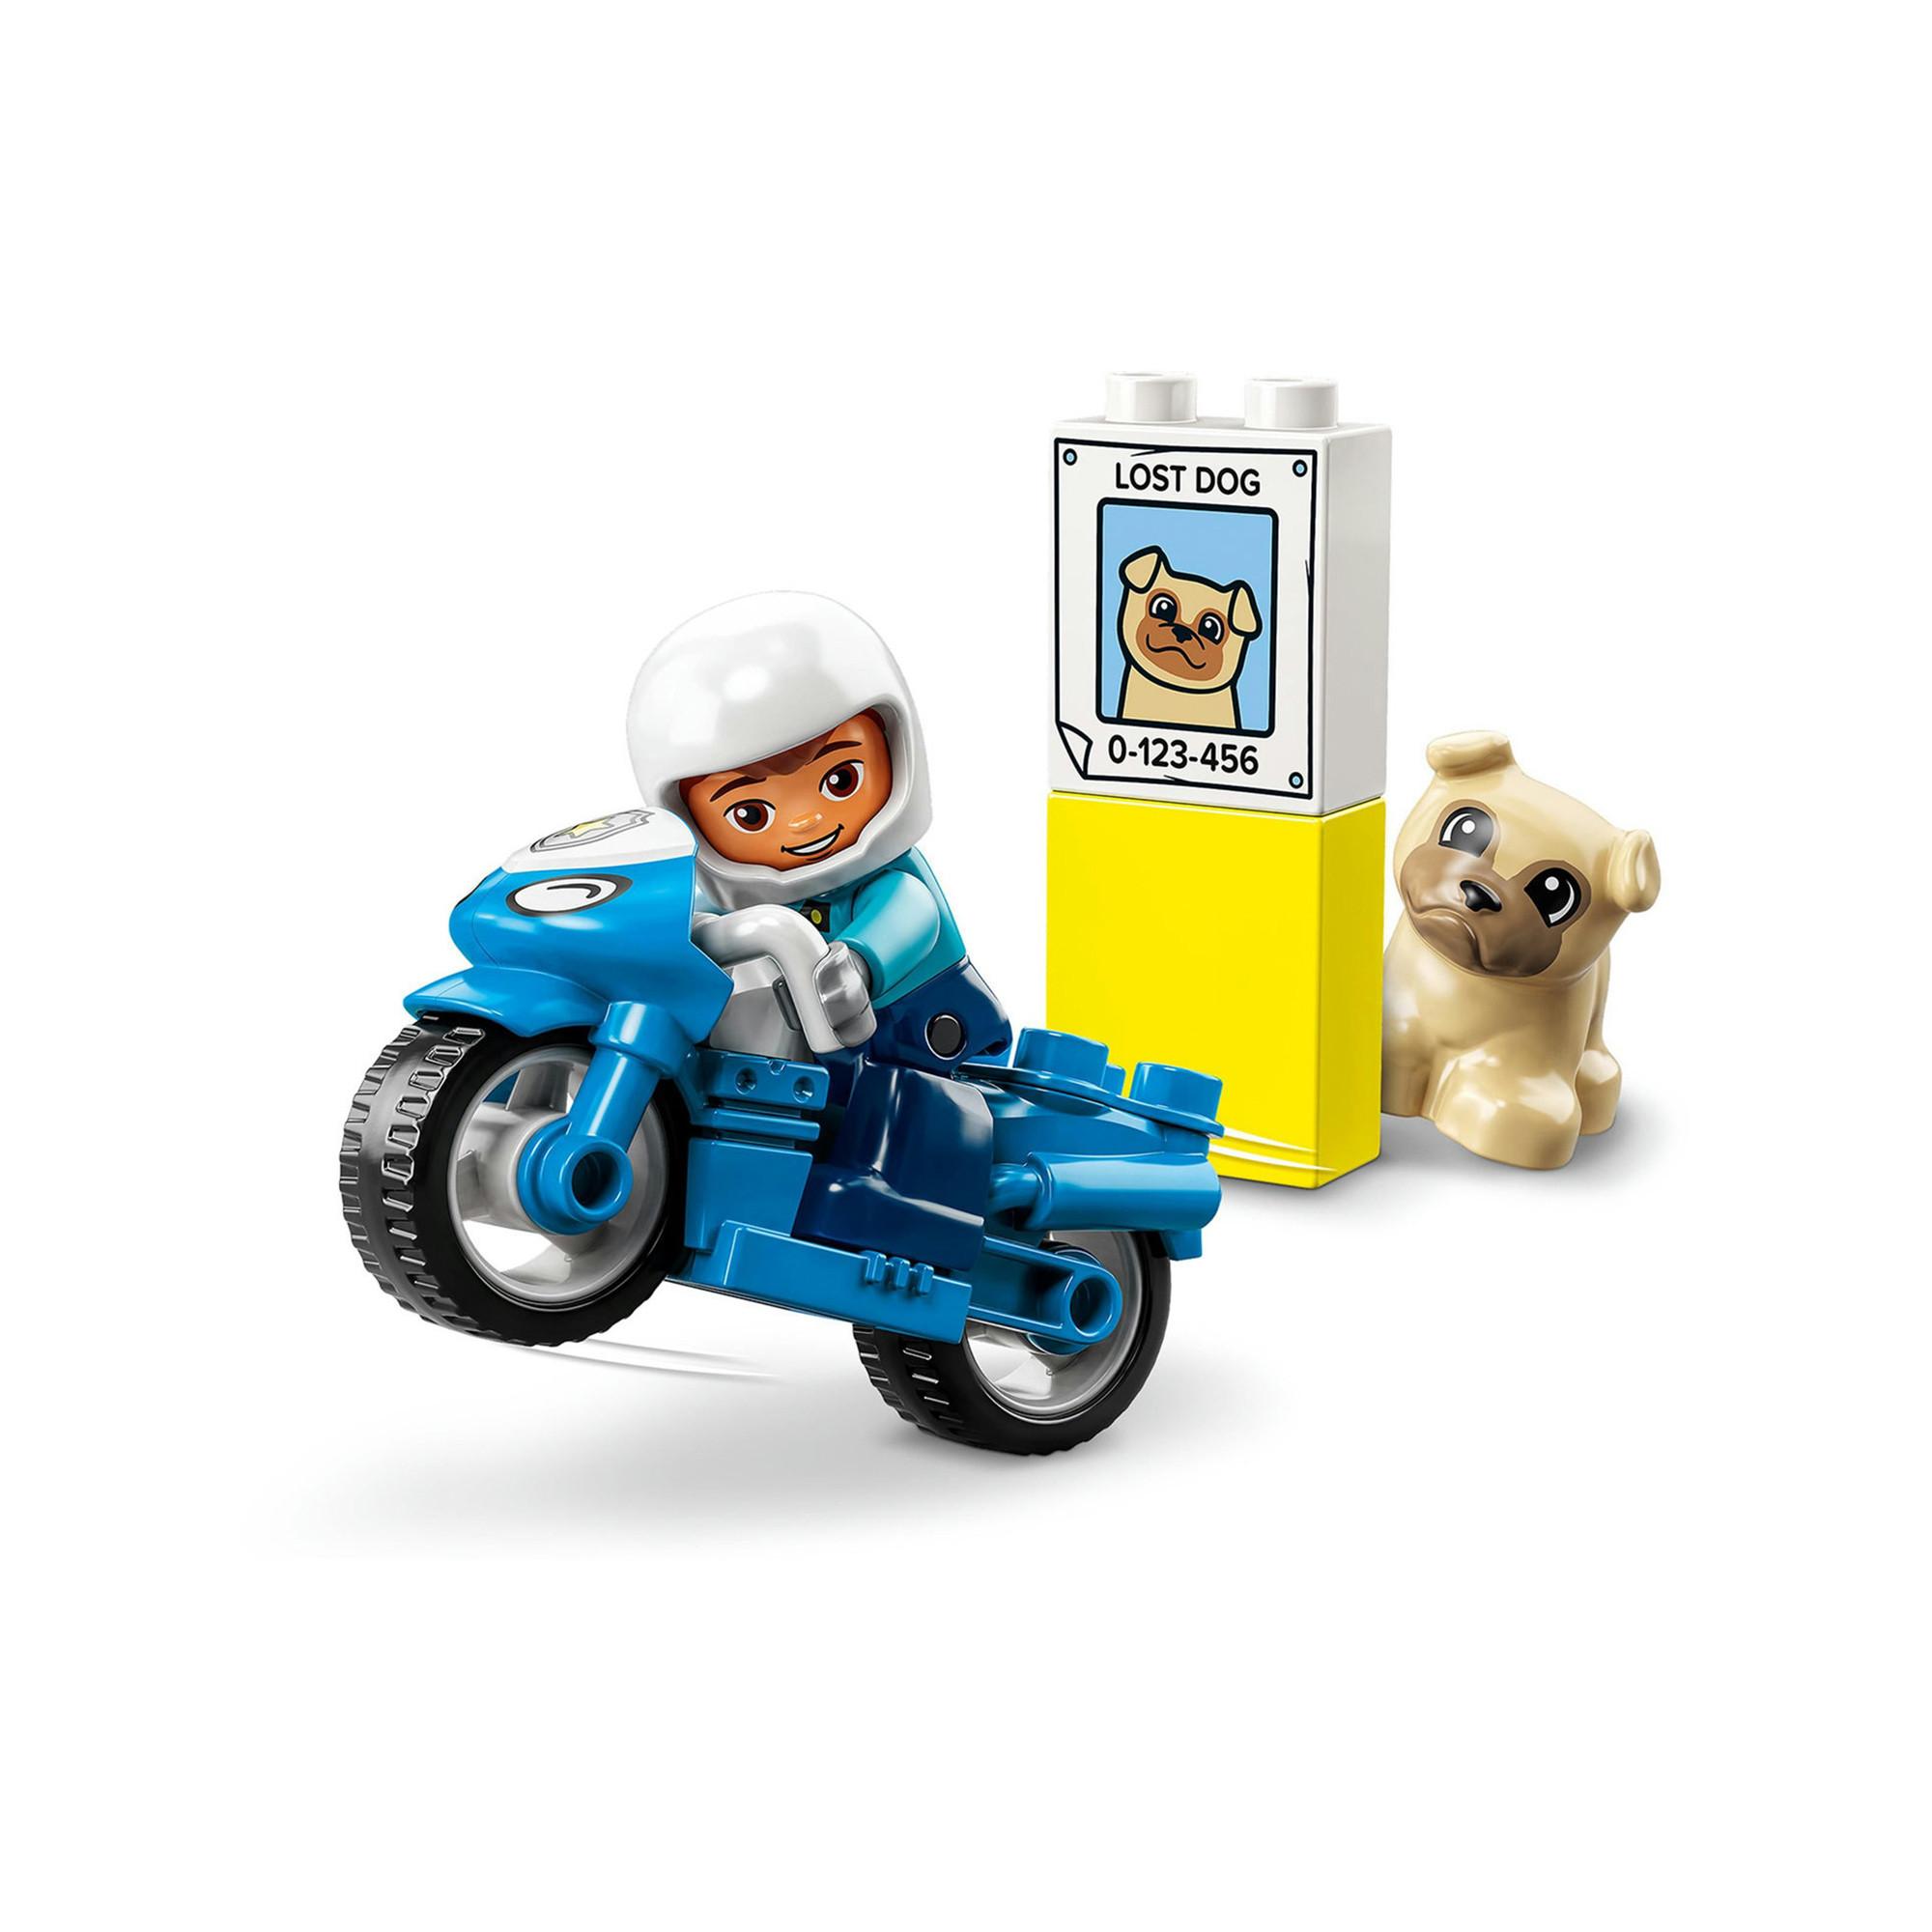 LEGO®  10967 La moto de police 